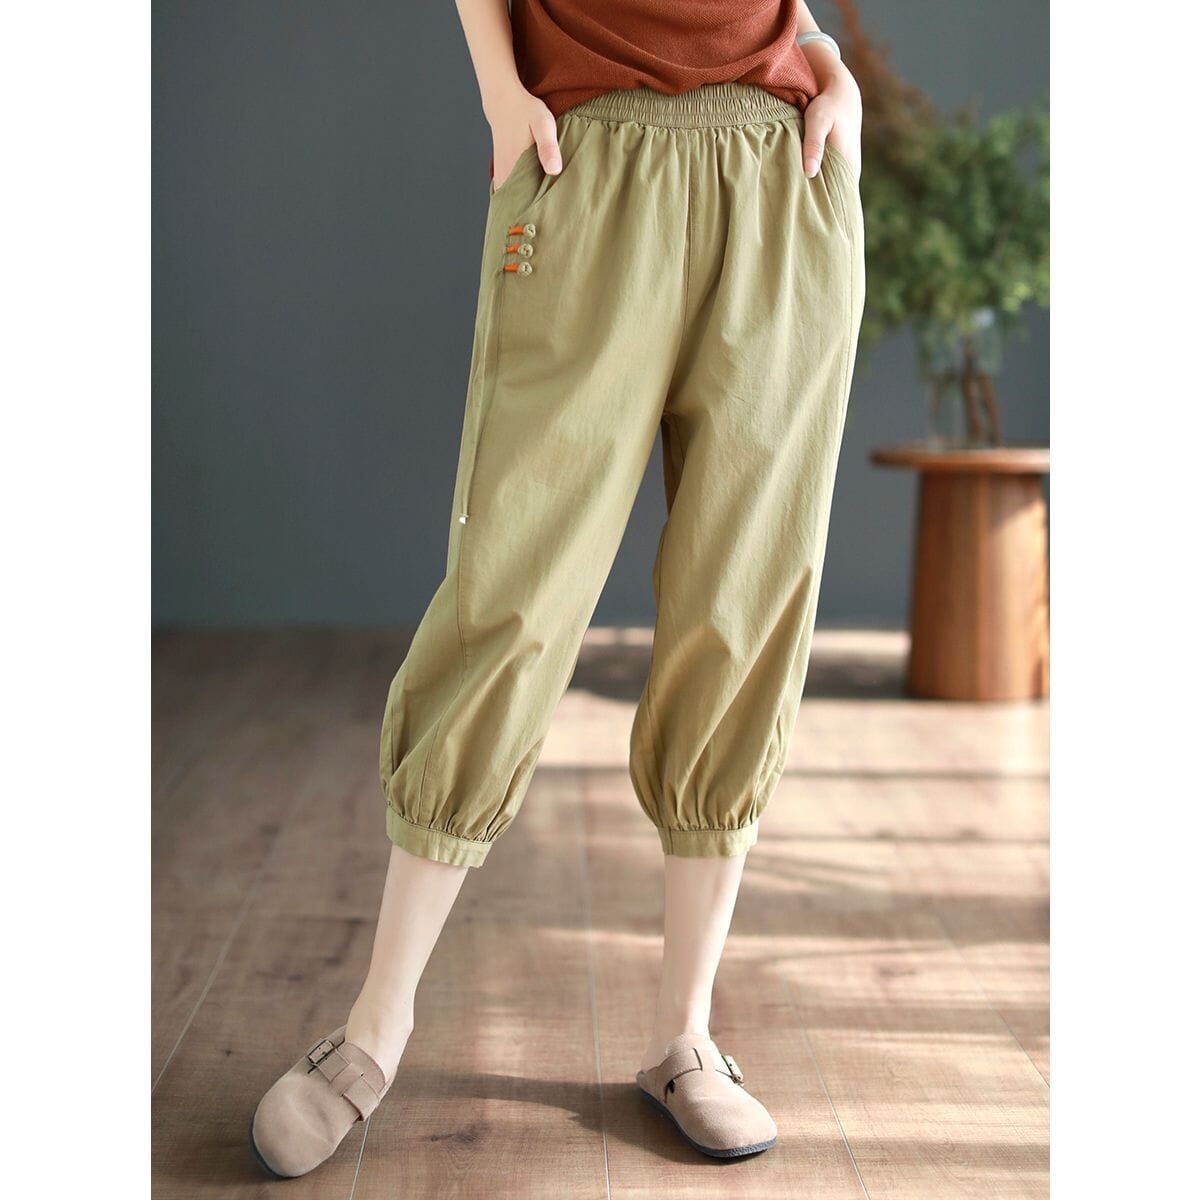 Women Summer Cottotton Solid Calf-length Harem Pants